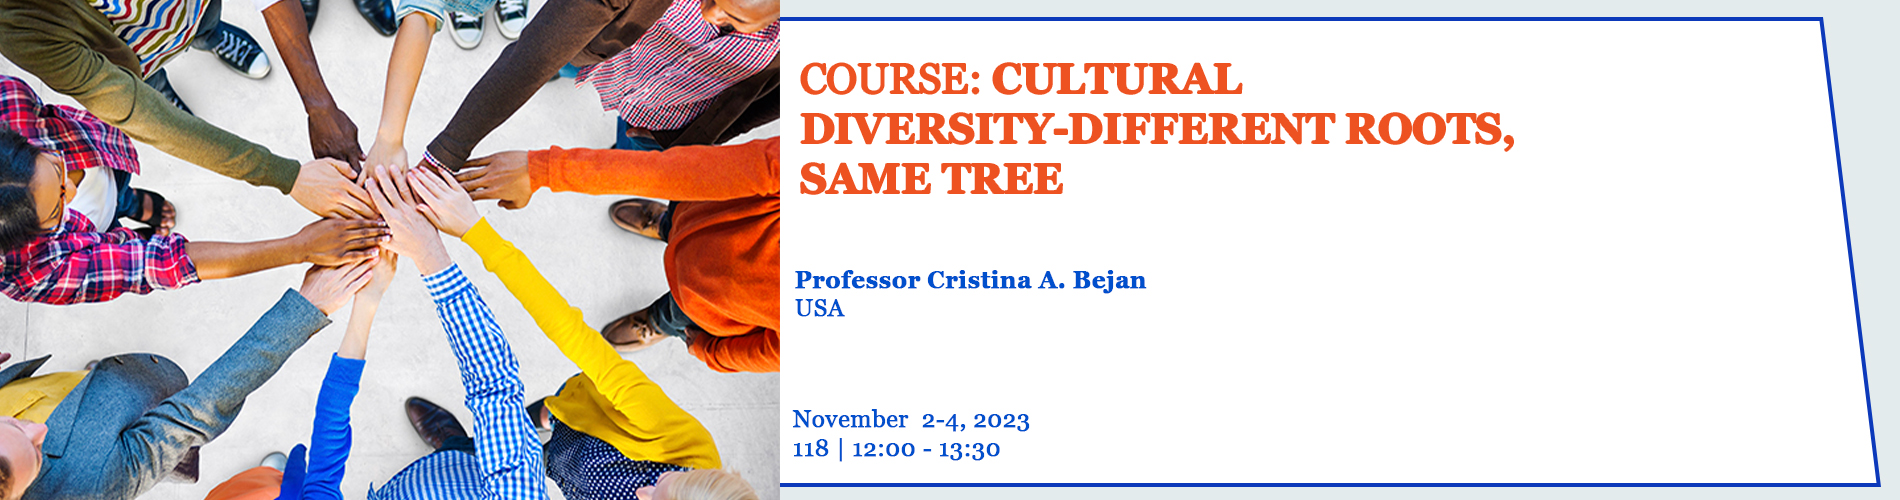 2023112-4_-_Cultural_diversity-different_roots